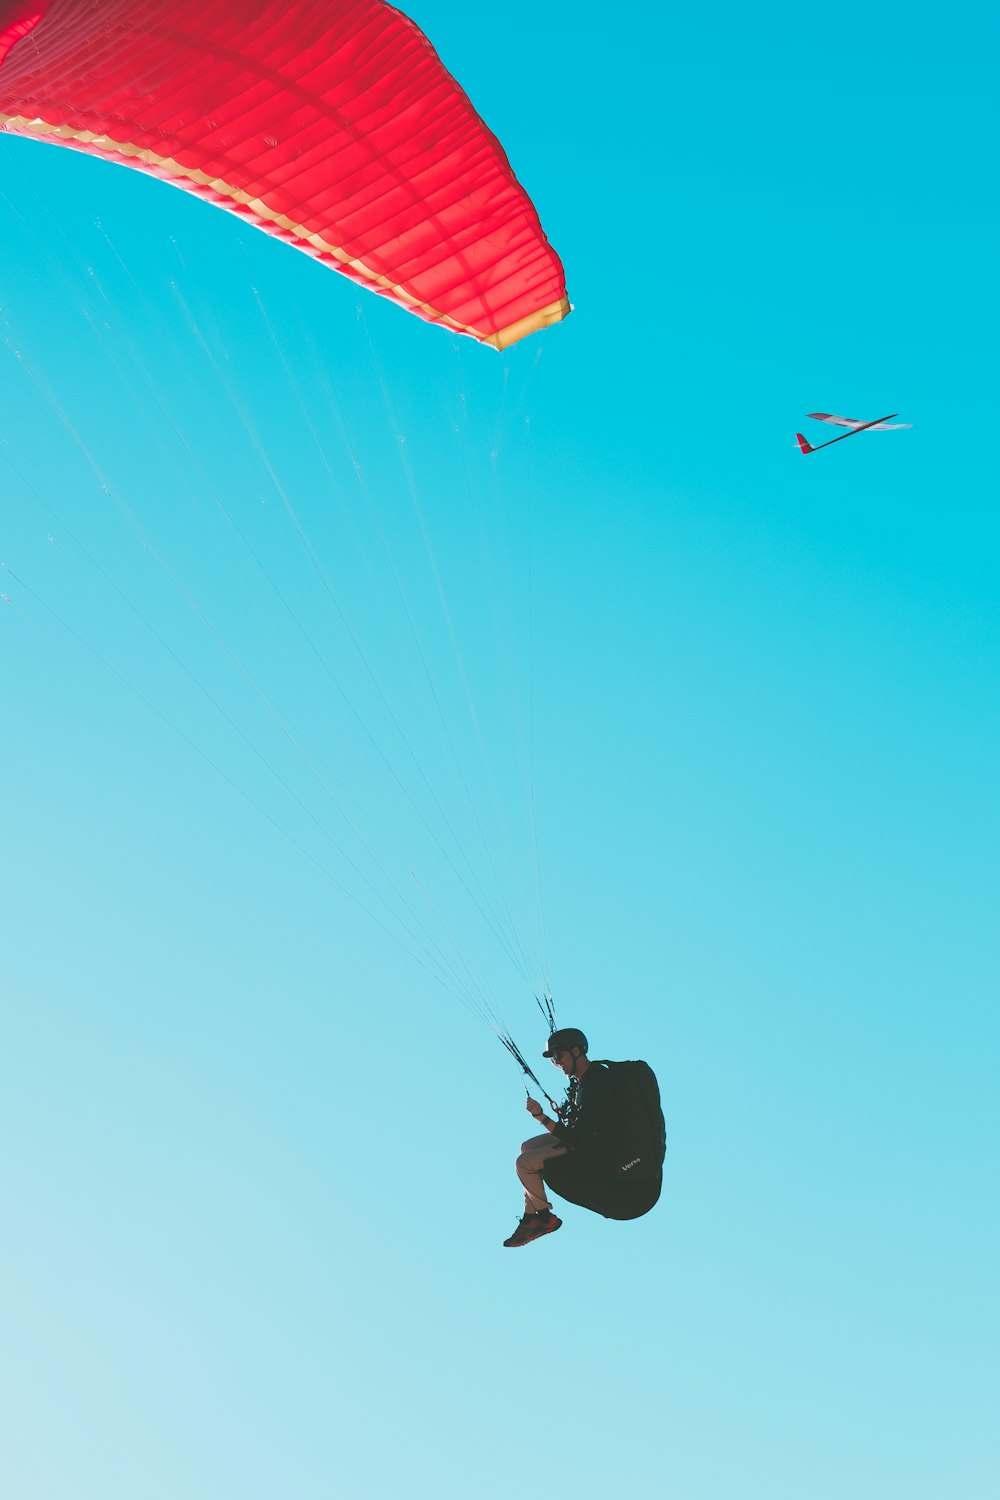 person parachuting at daytime